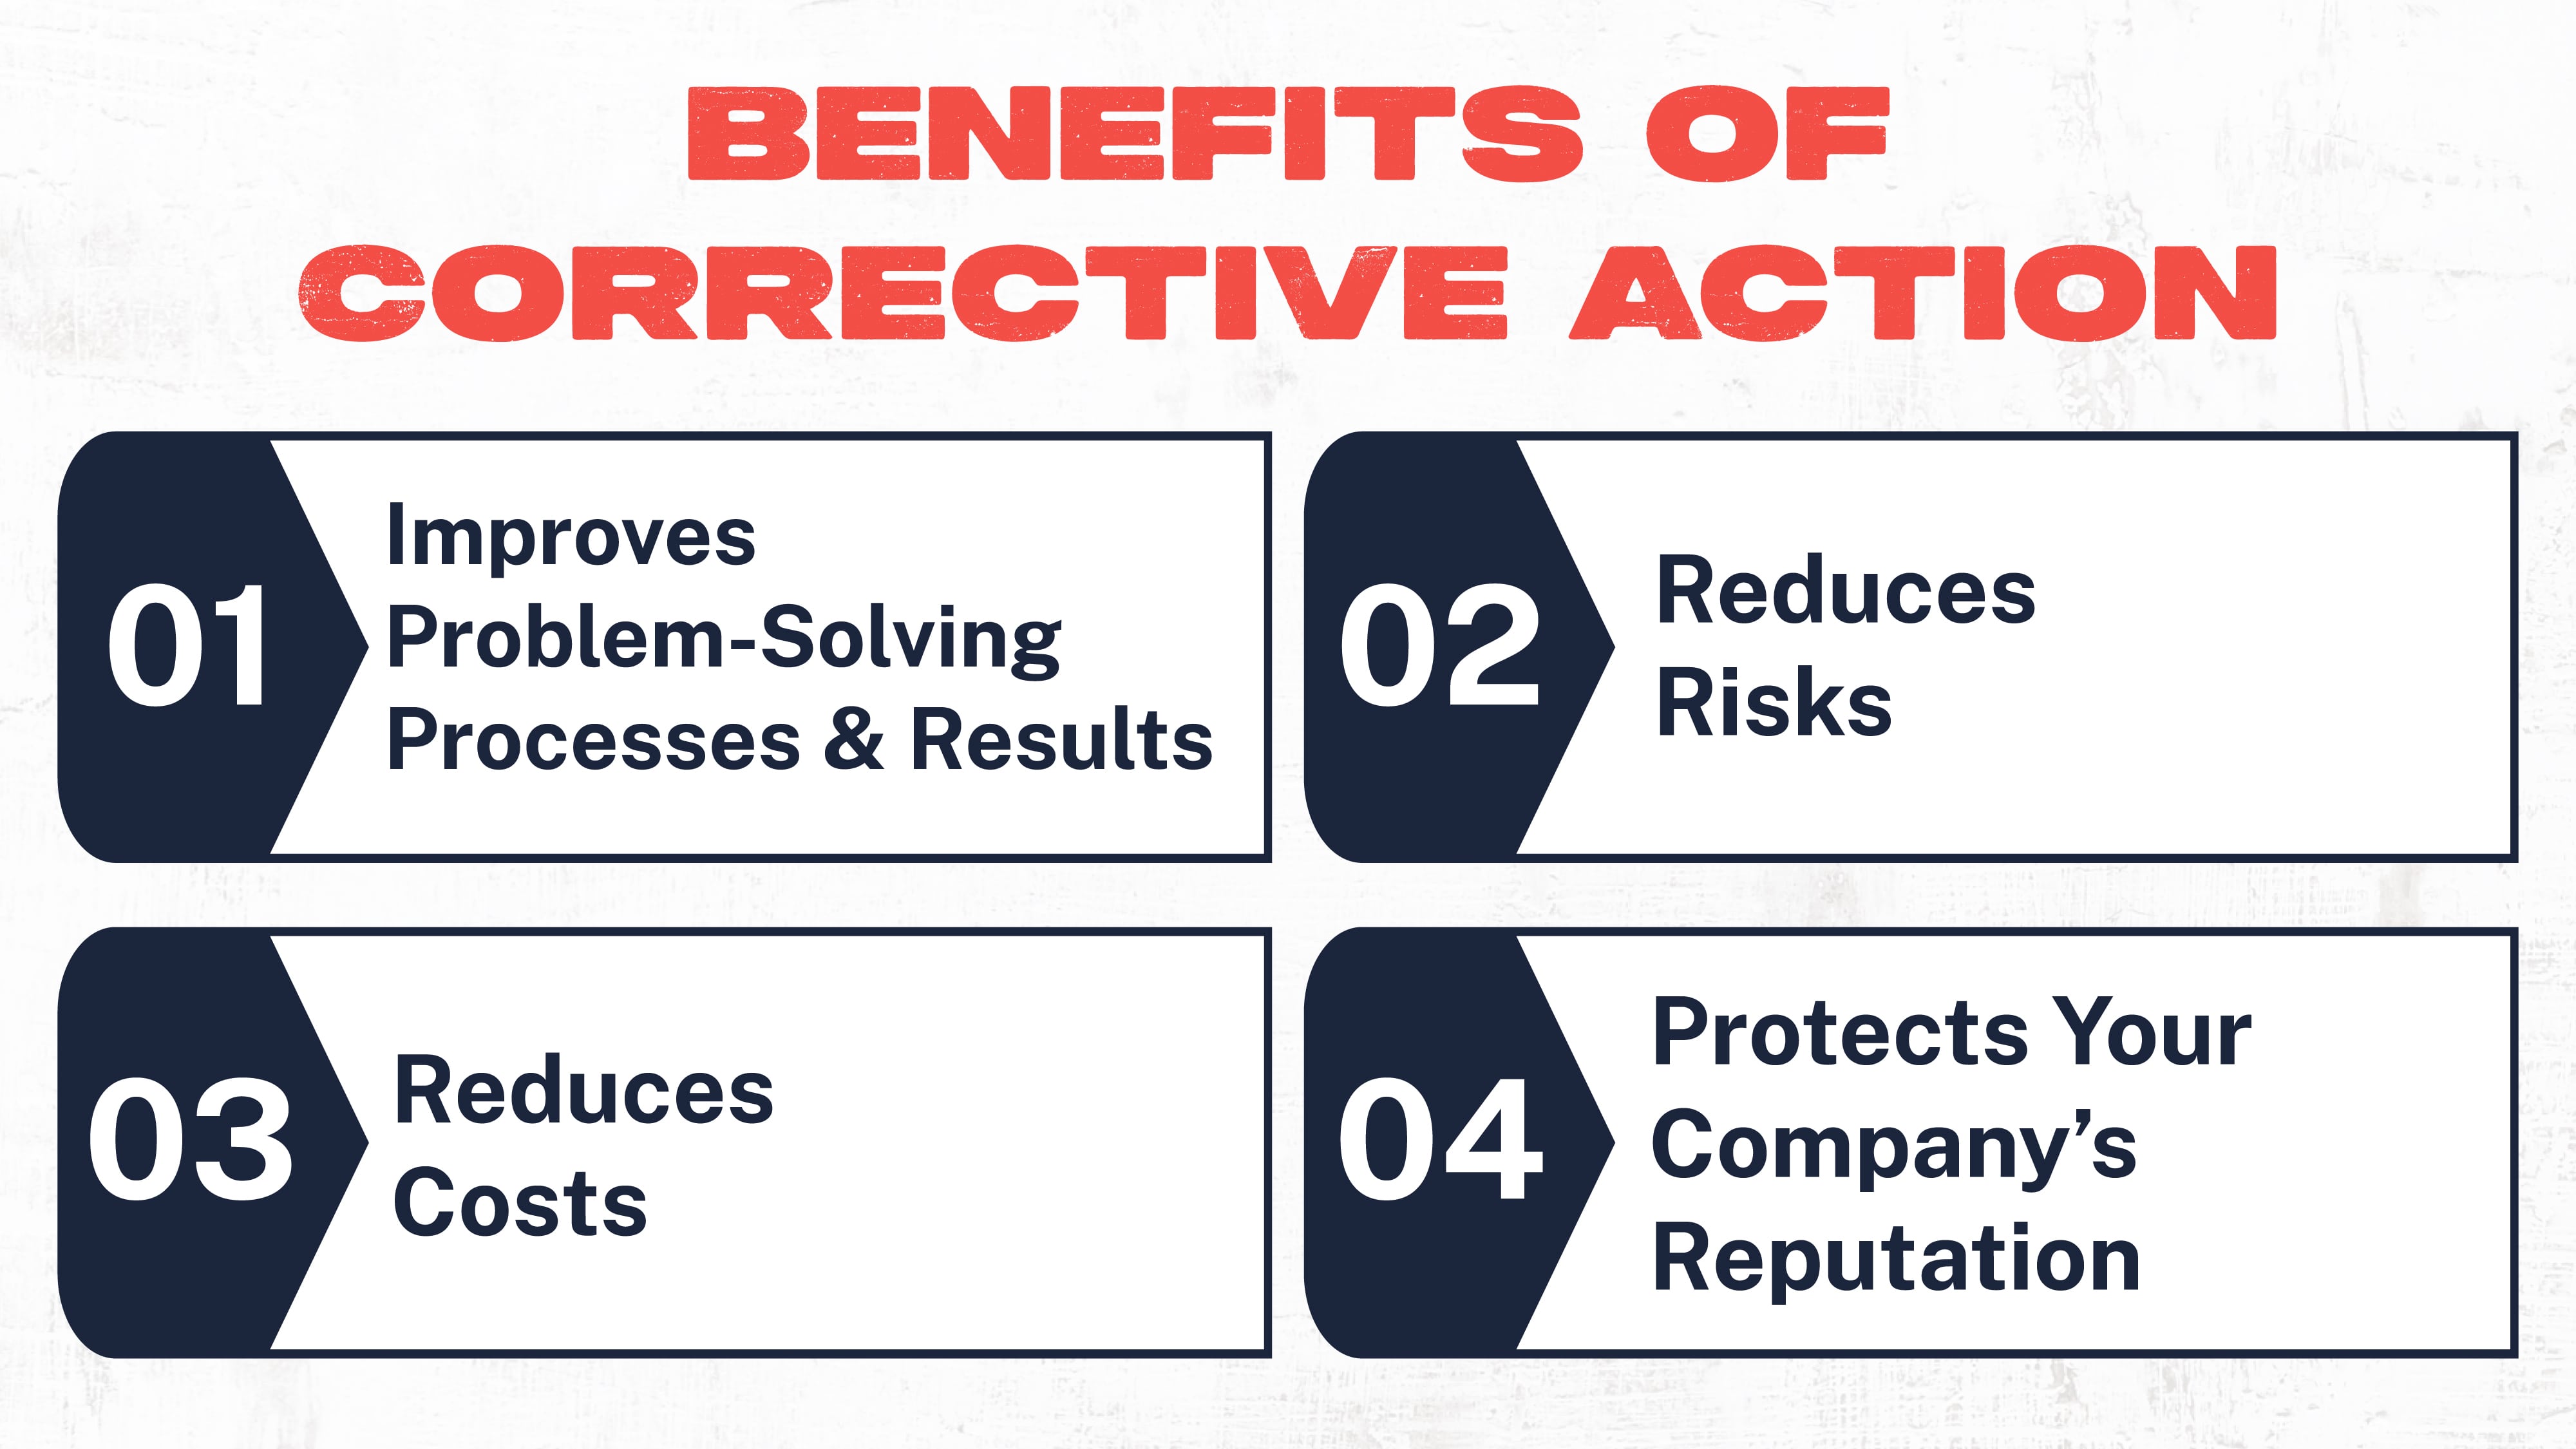 Benefits of Corrective Action